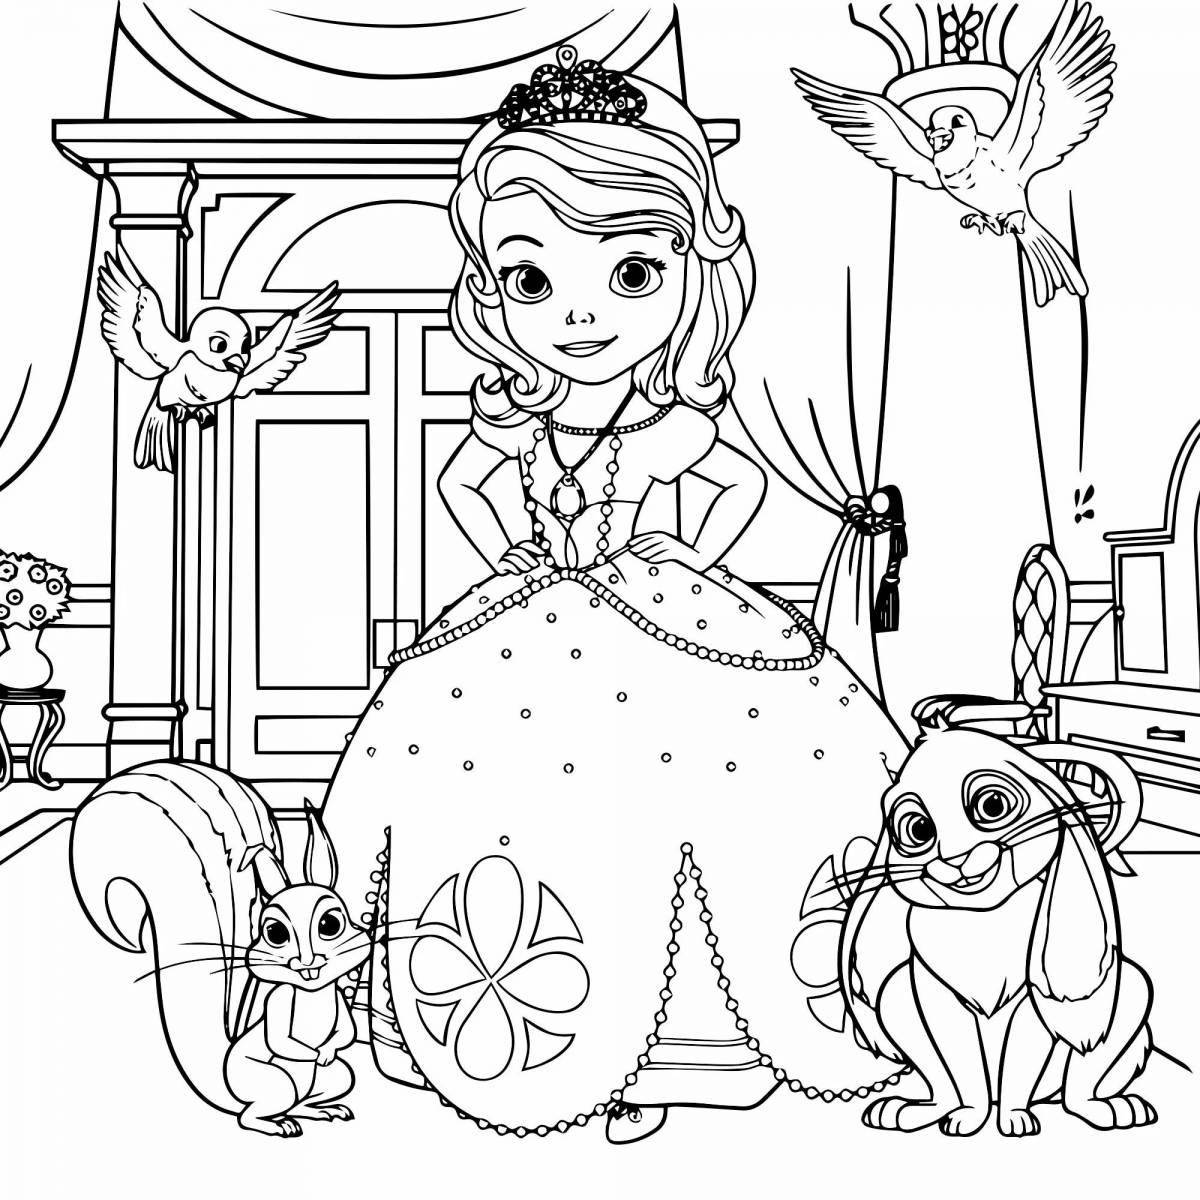 Colorful princess coloring page